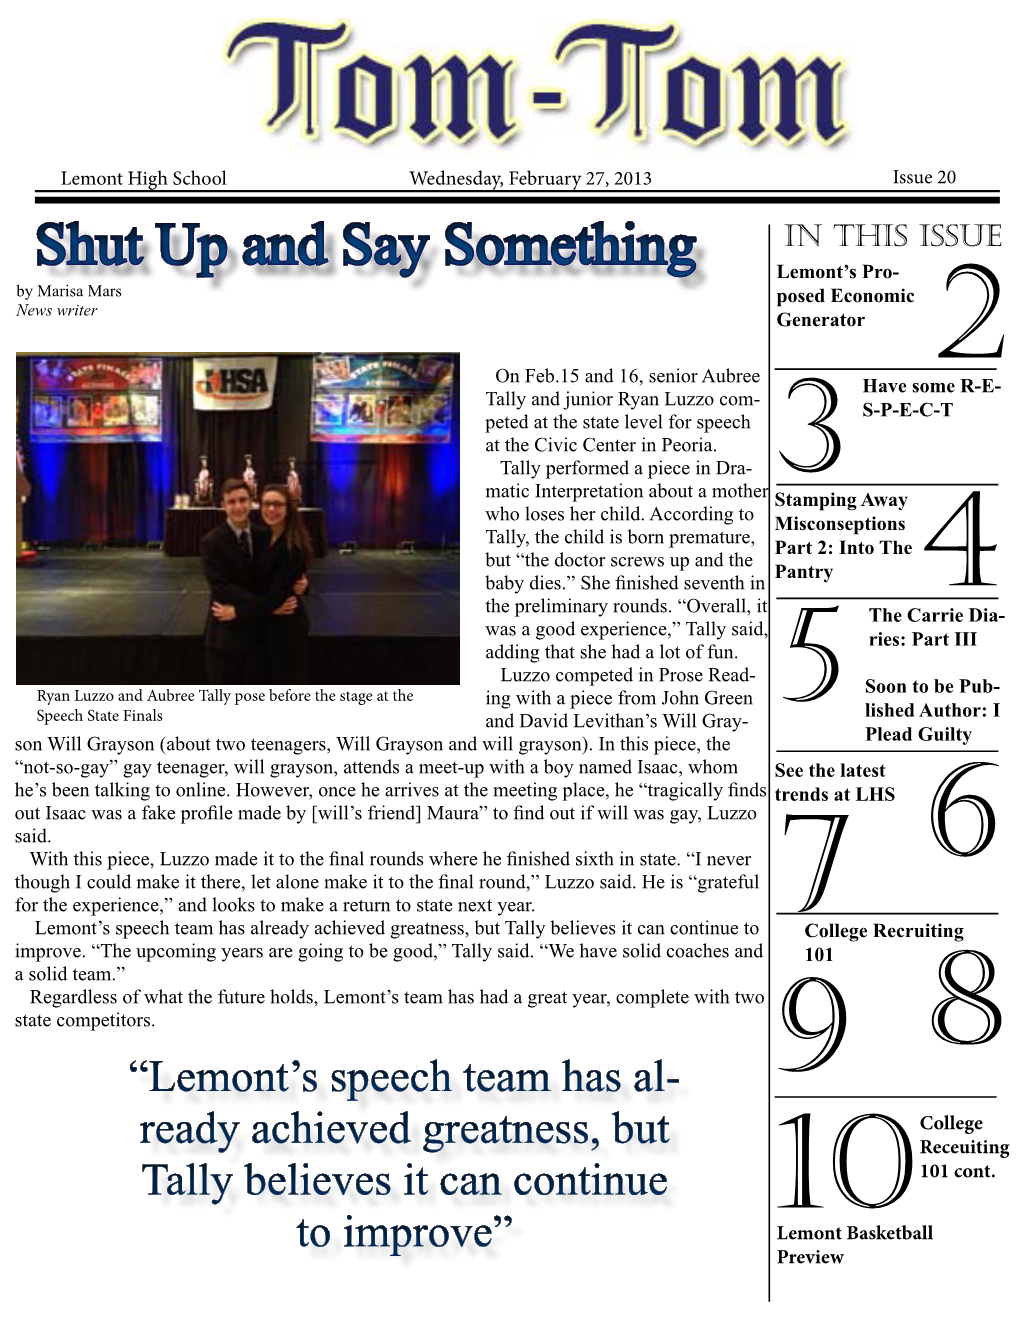 Shut up and Say Something Lemont’S Pro- by Marisa Mars Posed Economic News Writer Generator